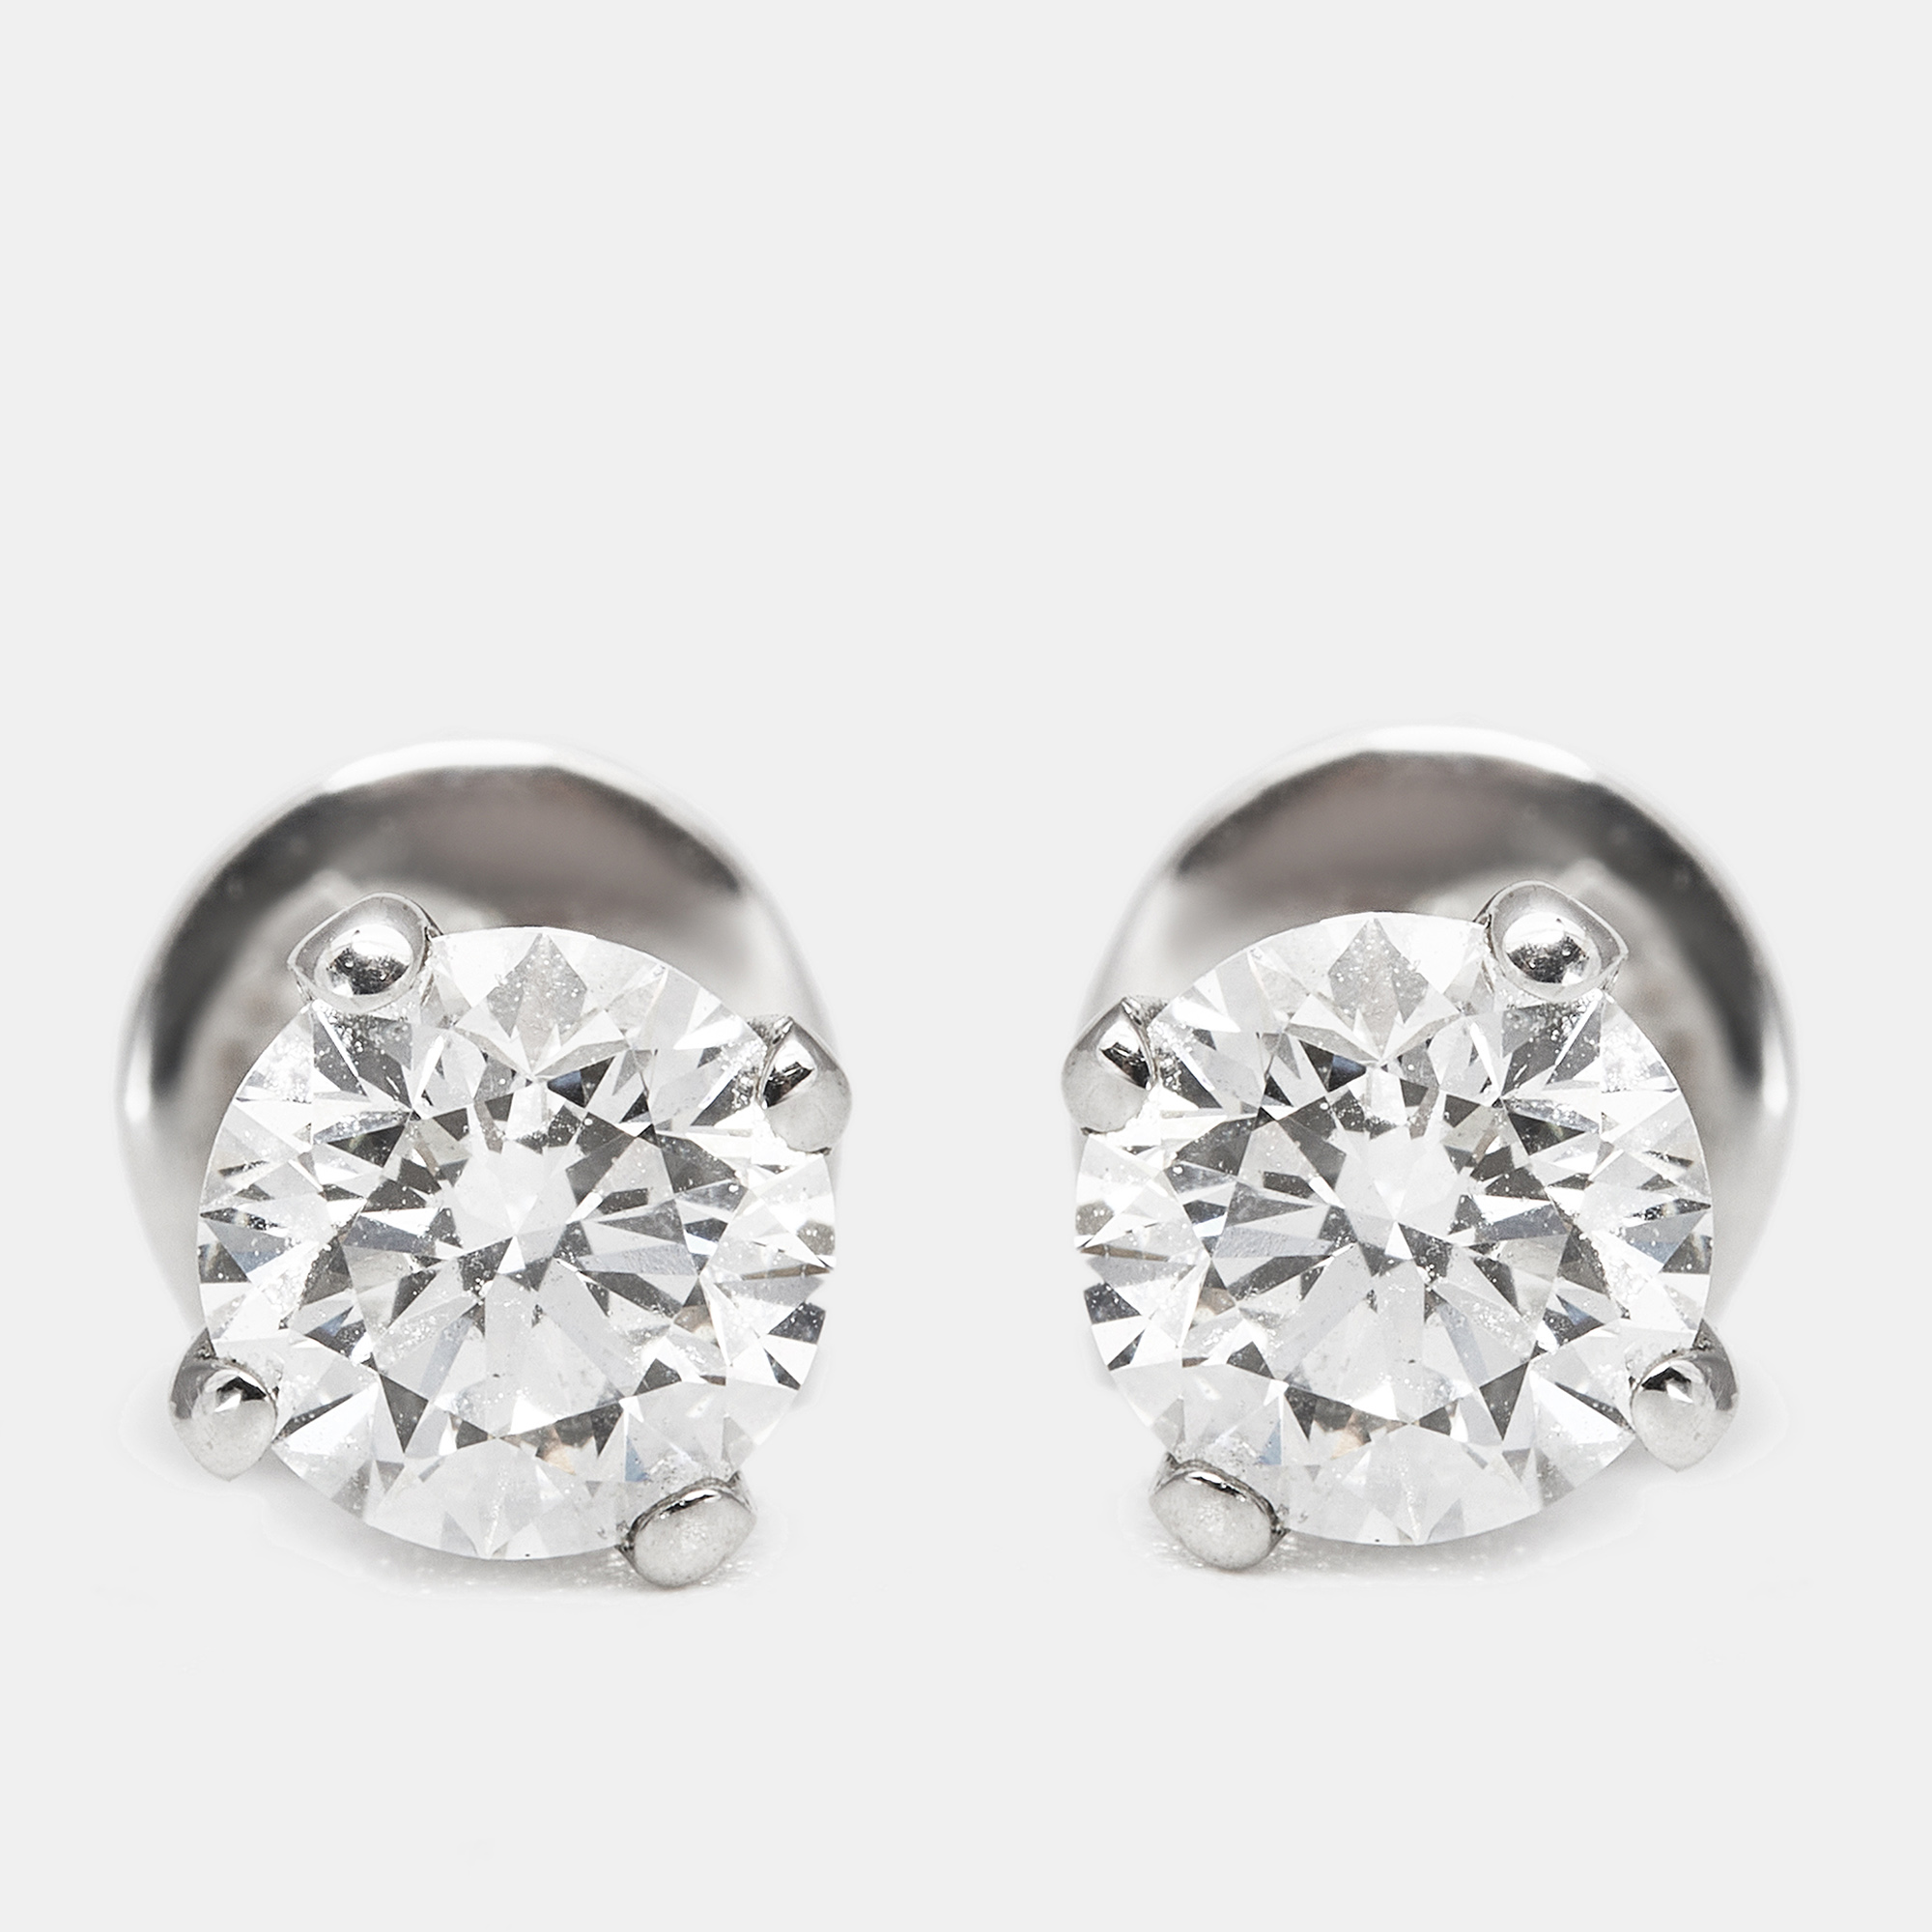 

Daily Wear Elegant Solitaire Diamonds (0.65 ct) 18k White Gold Stud Earrings